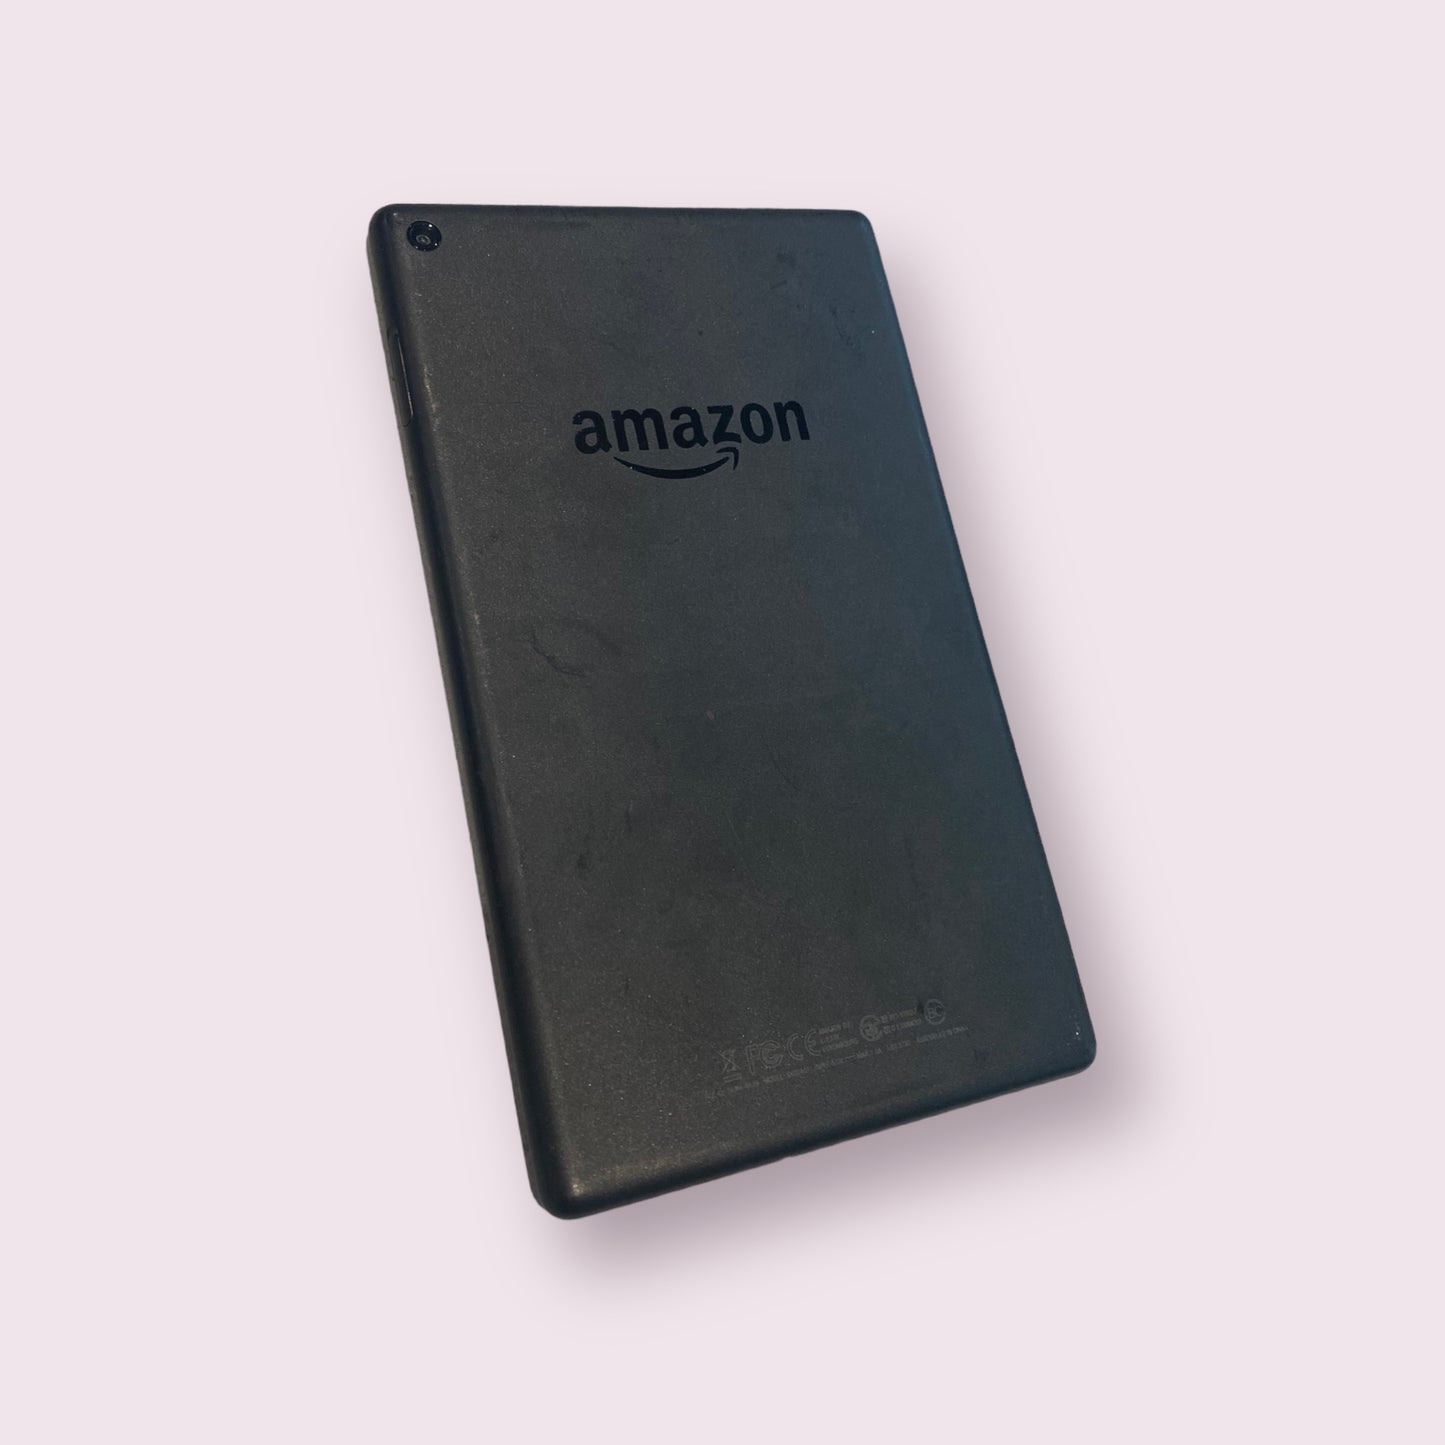 Amazon Kindle Fire HD 8" Black SX034QT - Grade B - Fully Working